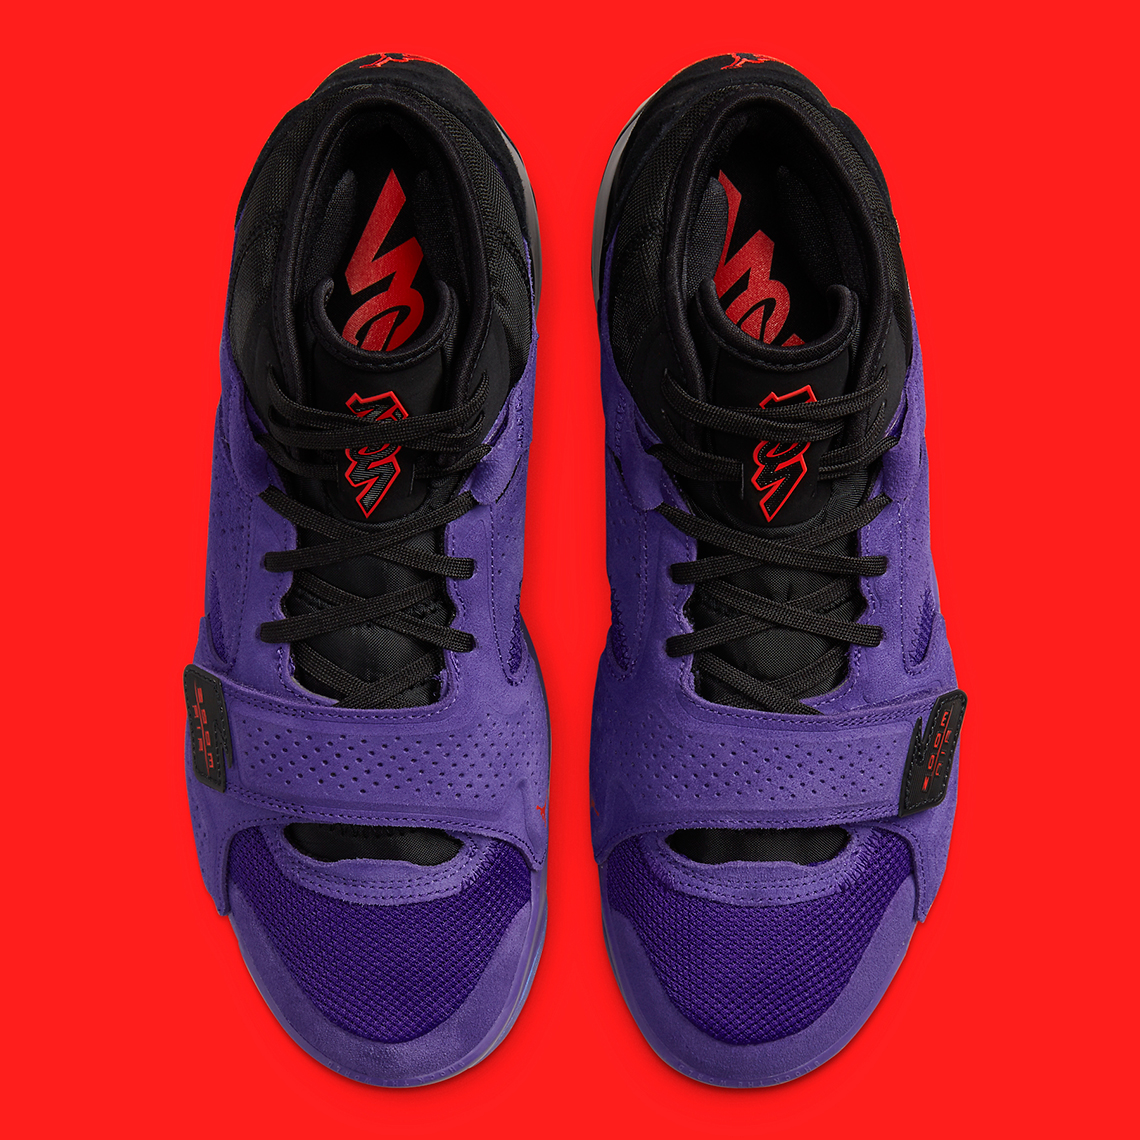 The Air Jordan 1 will be celebrating the 2016 Rio Olympics with Purple Crimson Do9072 506 8